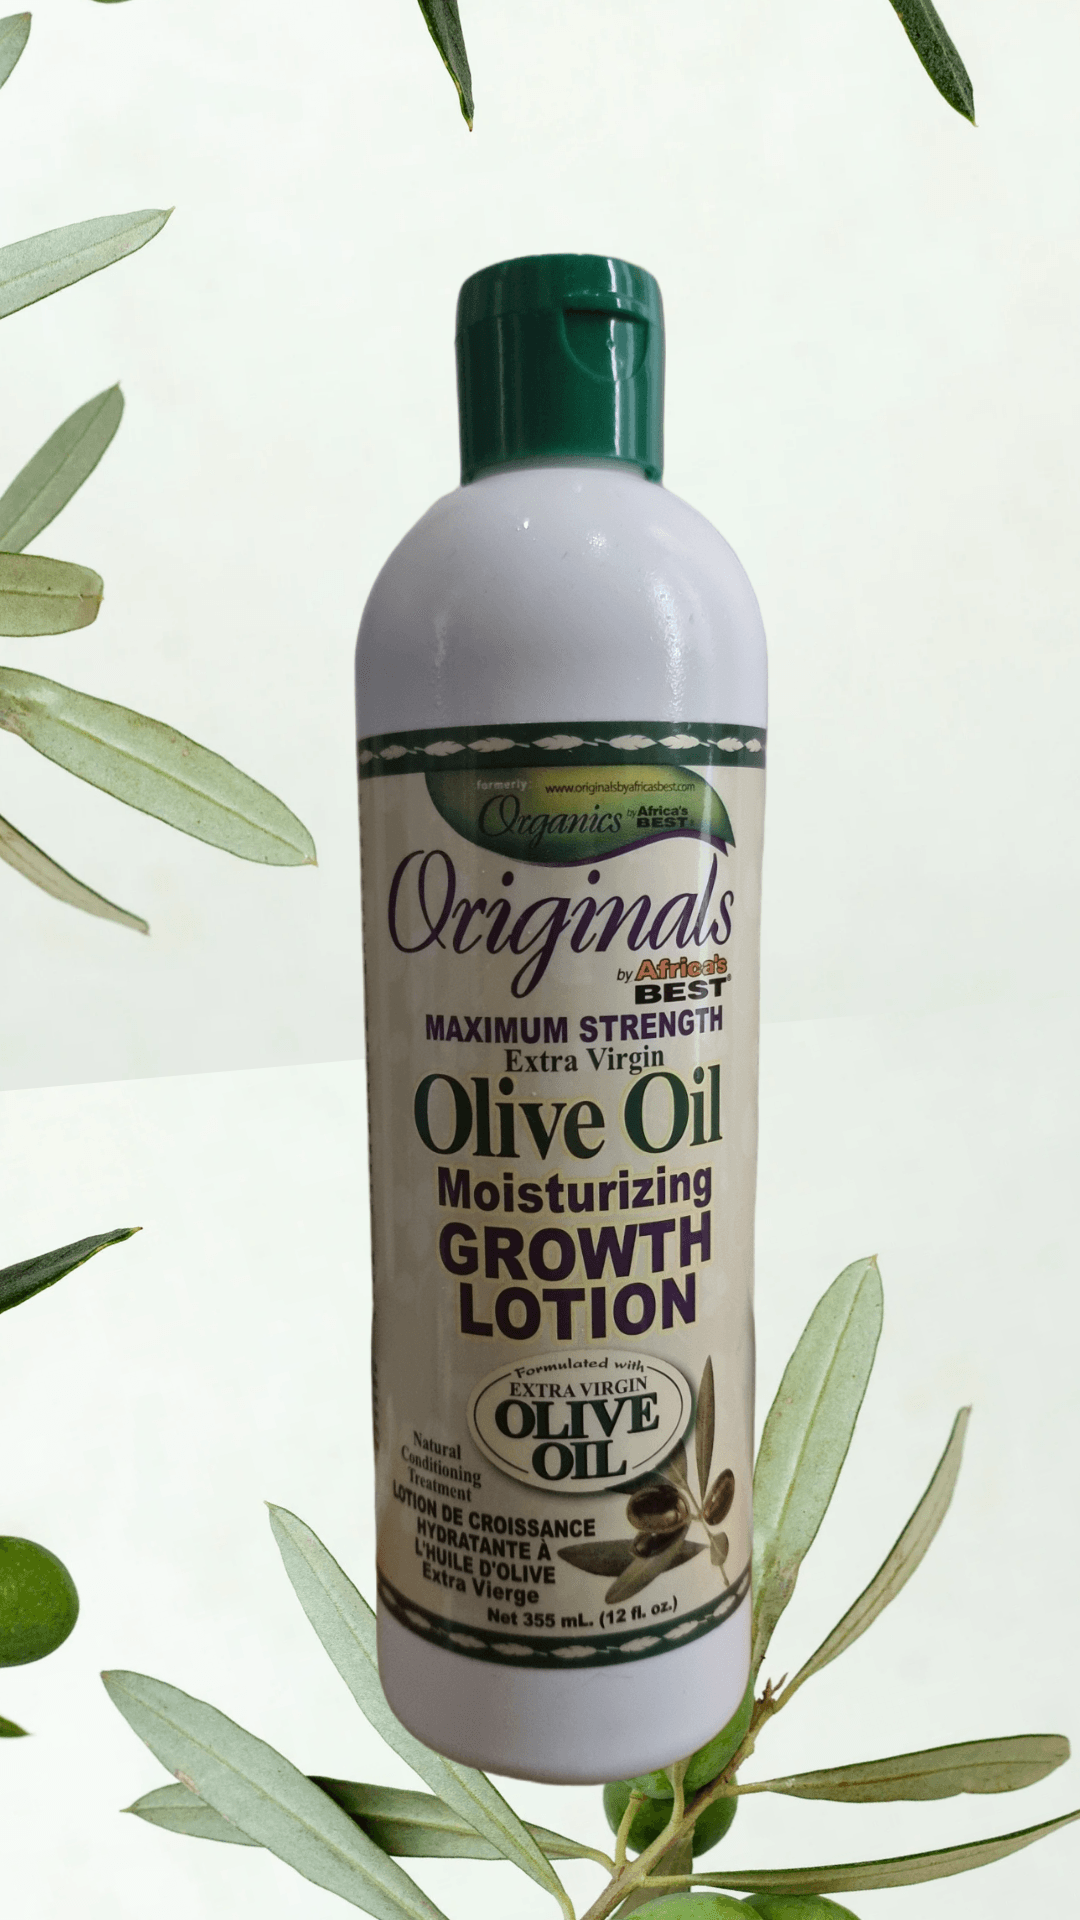 Africa's Best Originals Maximum Strength Extra Virgin Olive Oil Moisturizing Growth Lotion - LocsNco